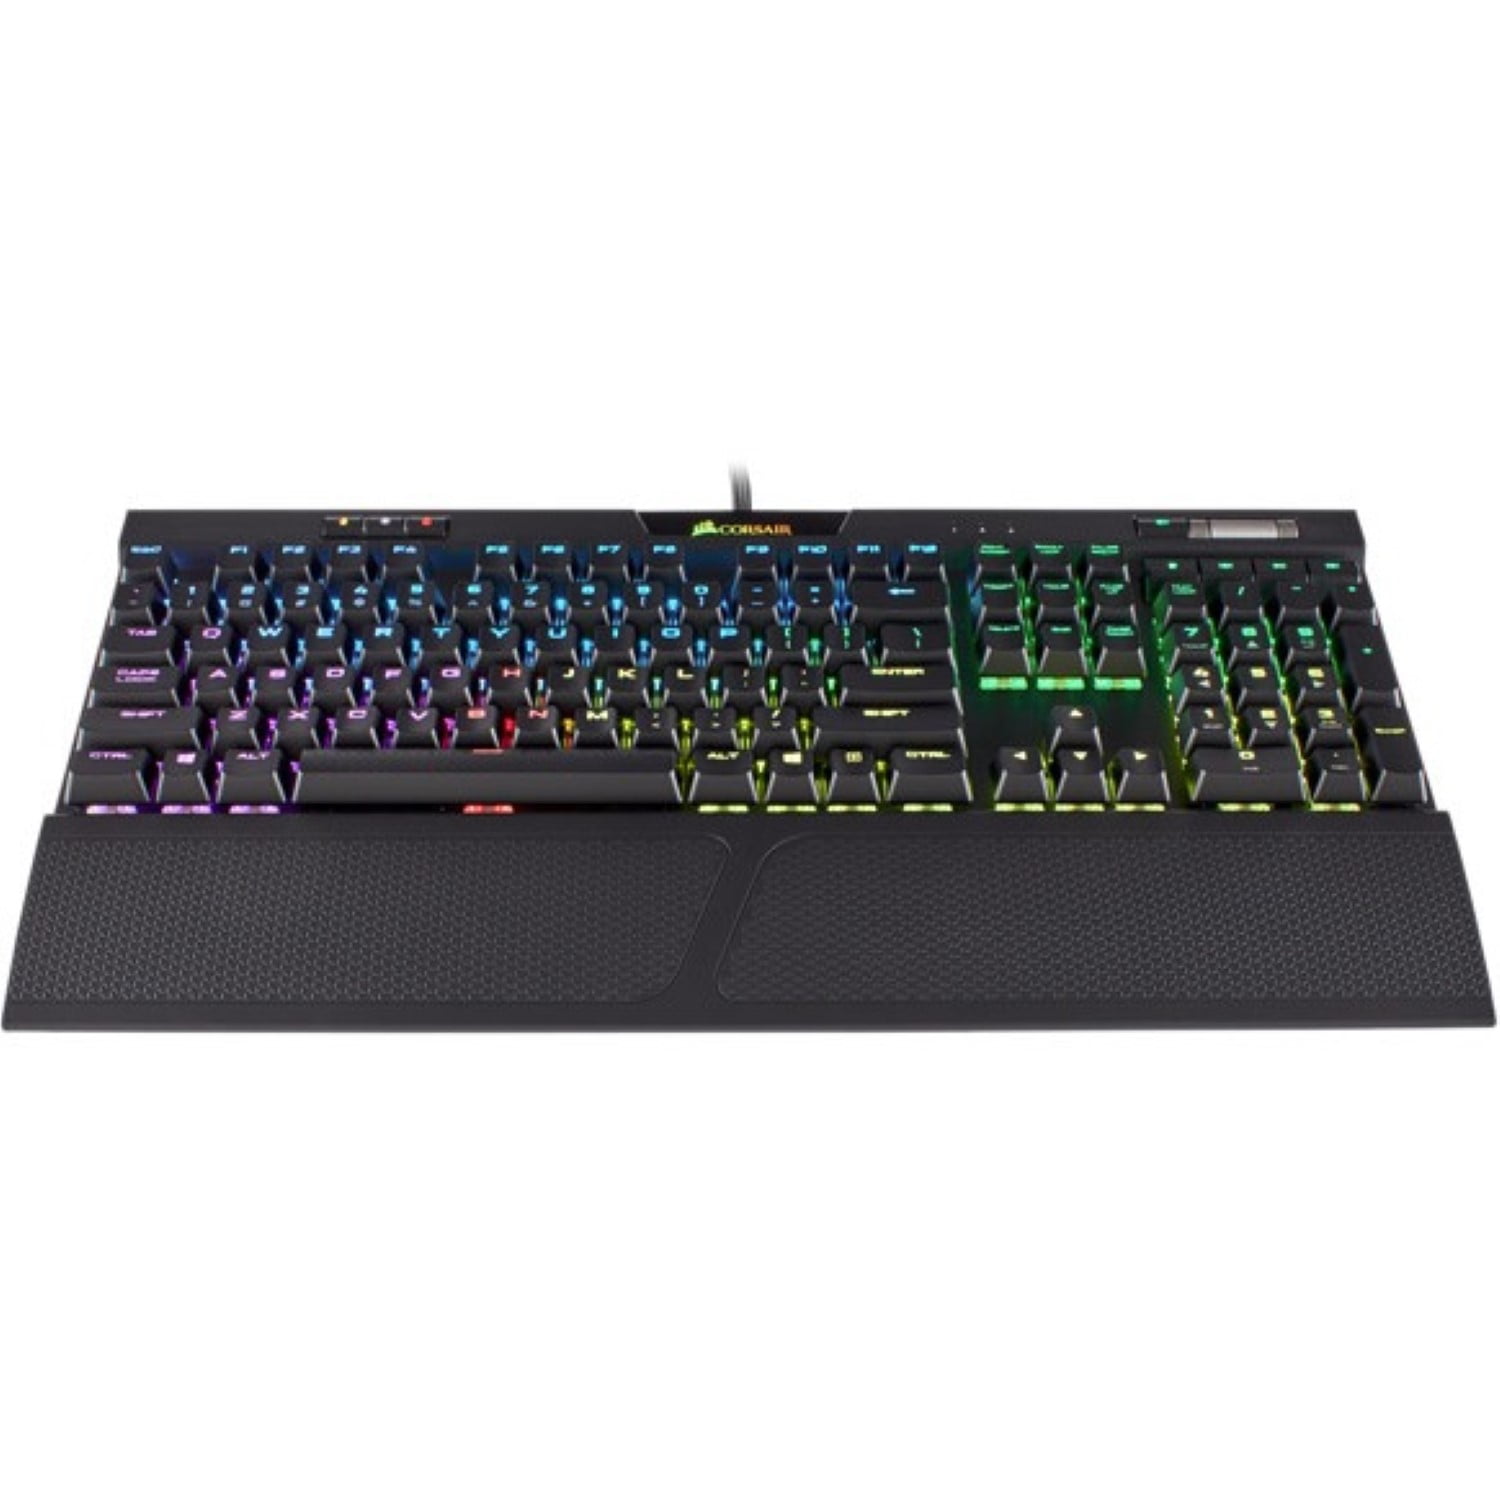 CORSAIR K70 RGB Gaming Keyboard Walmart.com